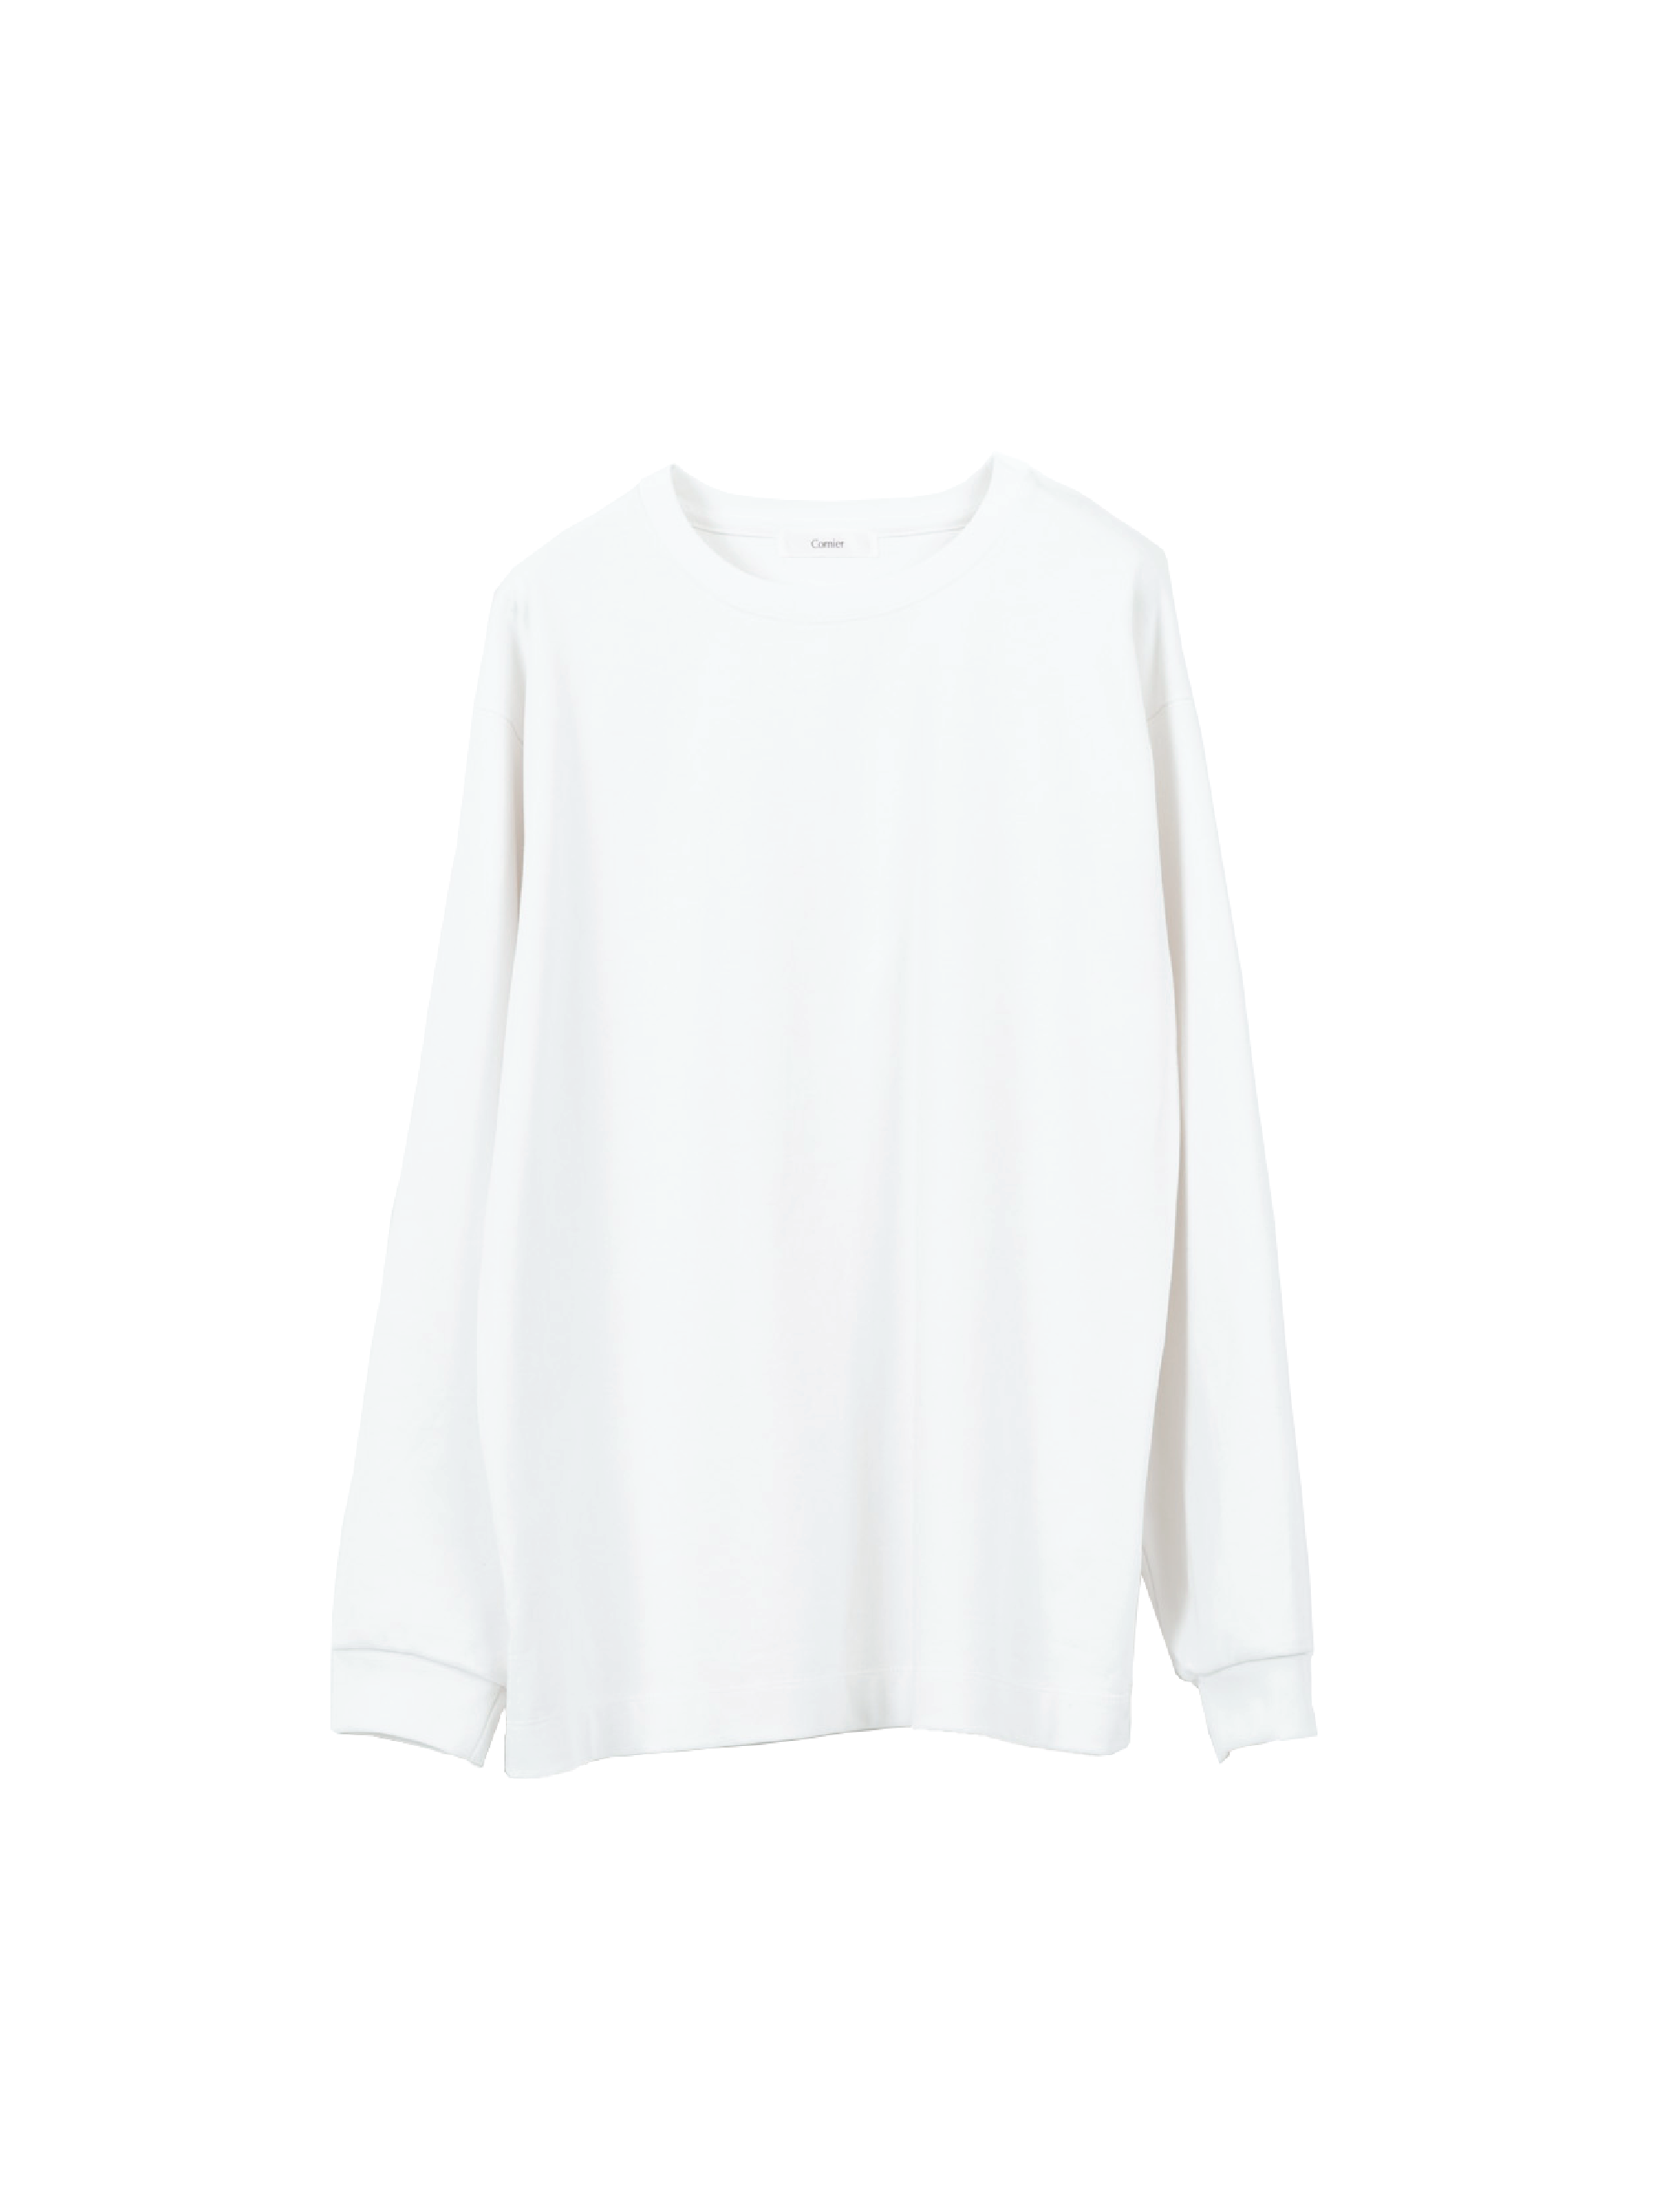 Unisex 65/35 Performance Long Sleeve T-Shirt